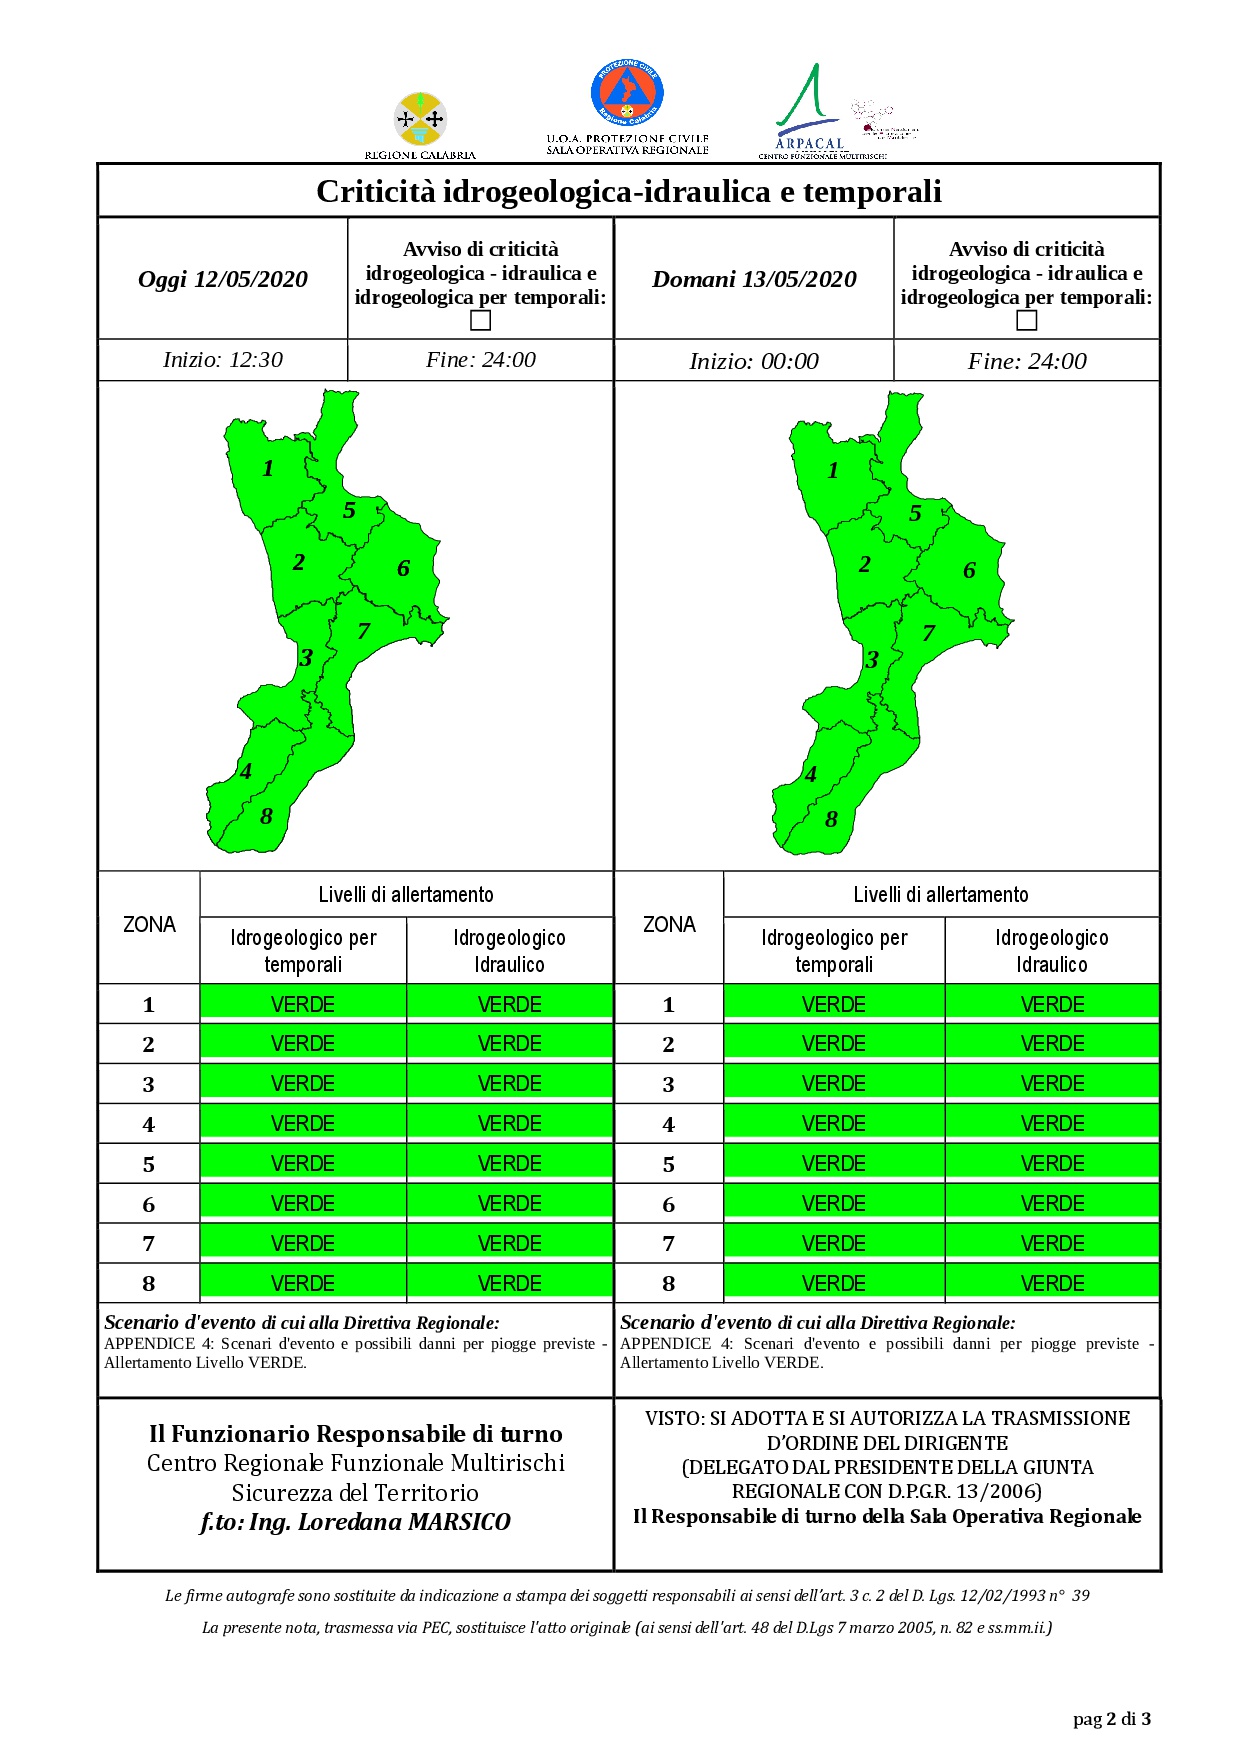 Criticità idrogeologica-idraulica e temporali in Calabria 12-05-2020